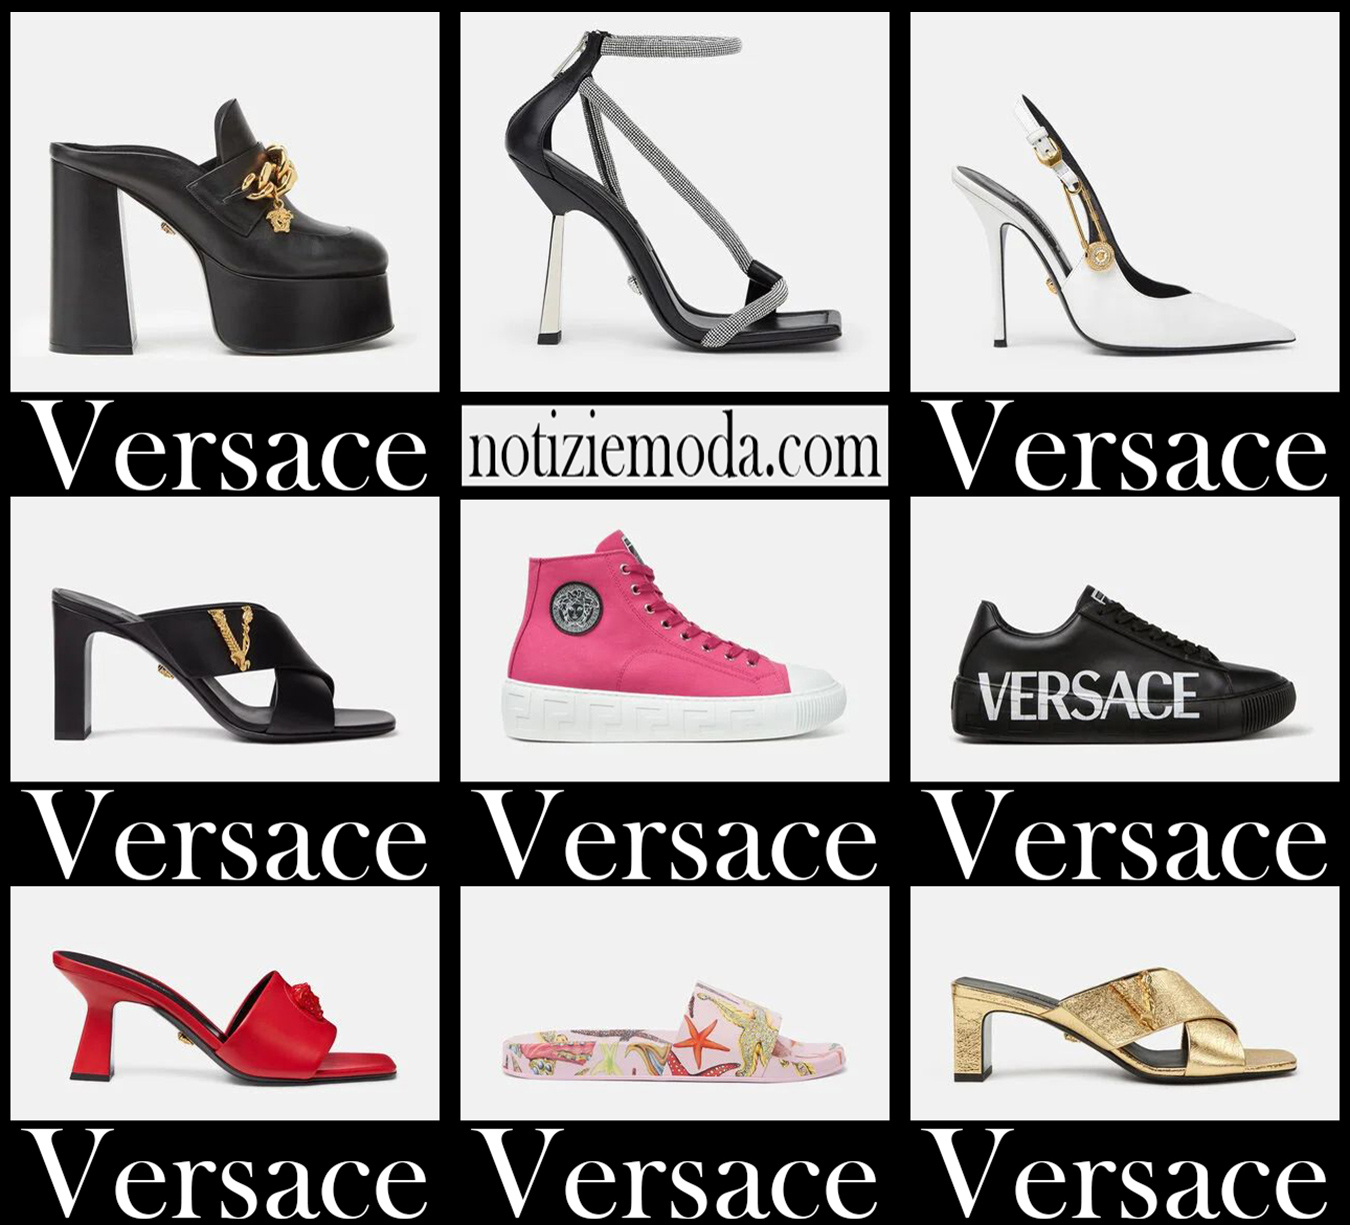 Nuovi arrivi scarpe Versace 2021 calzature moda donna